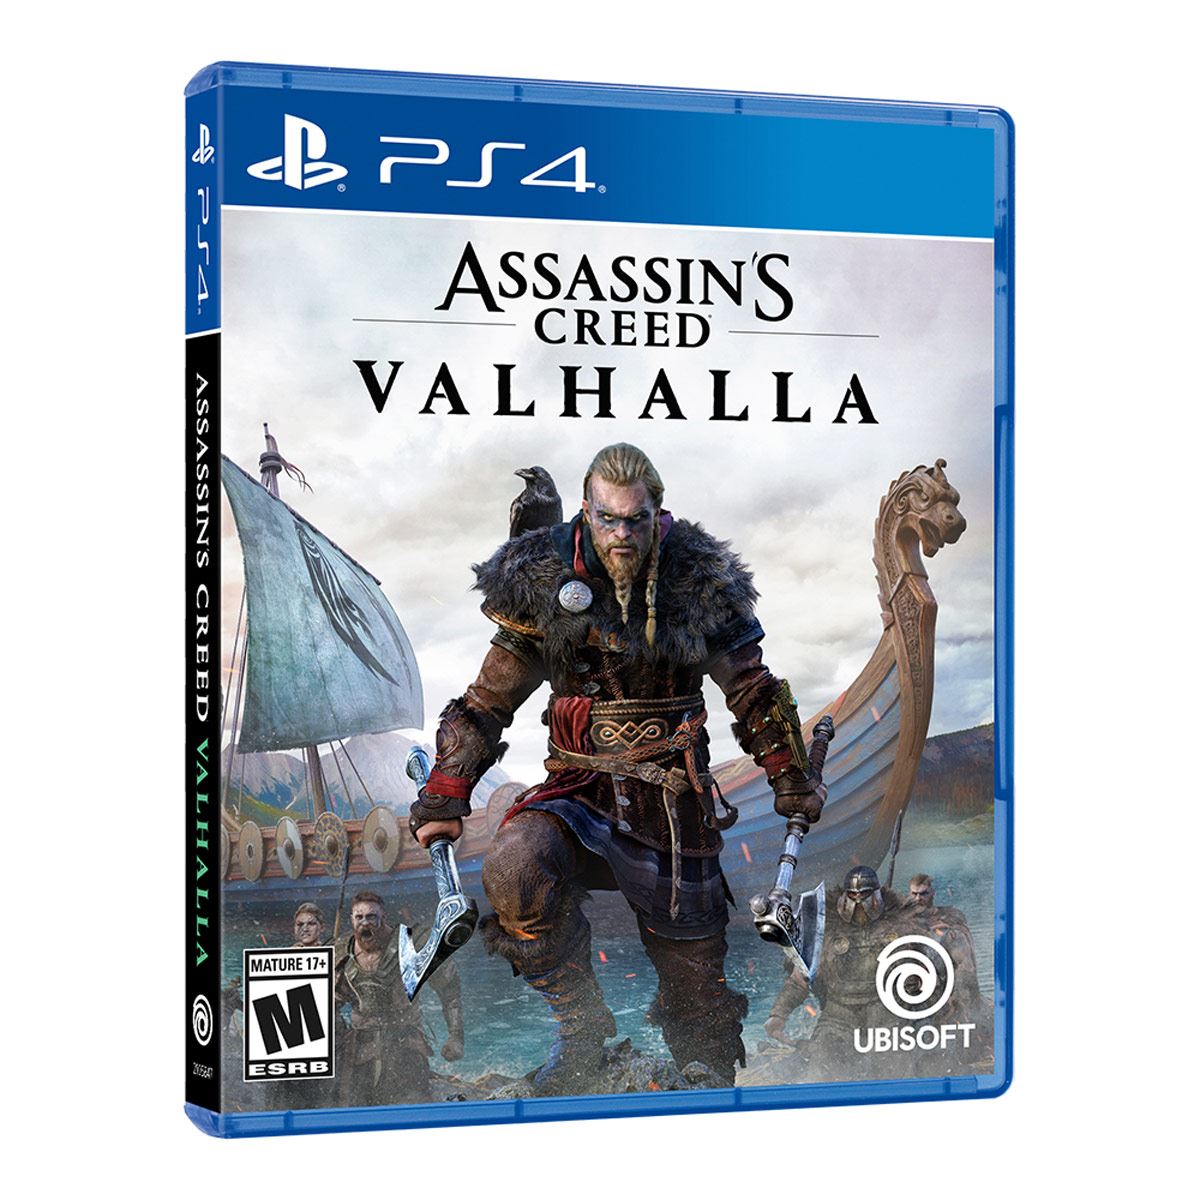 PS4 Assassin's Creed Valhalla